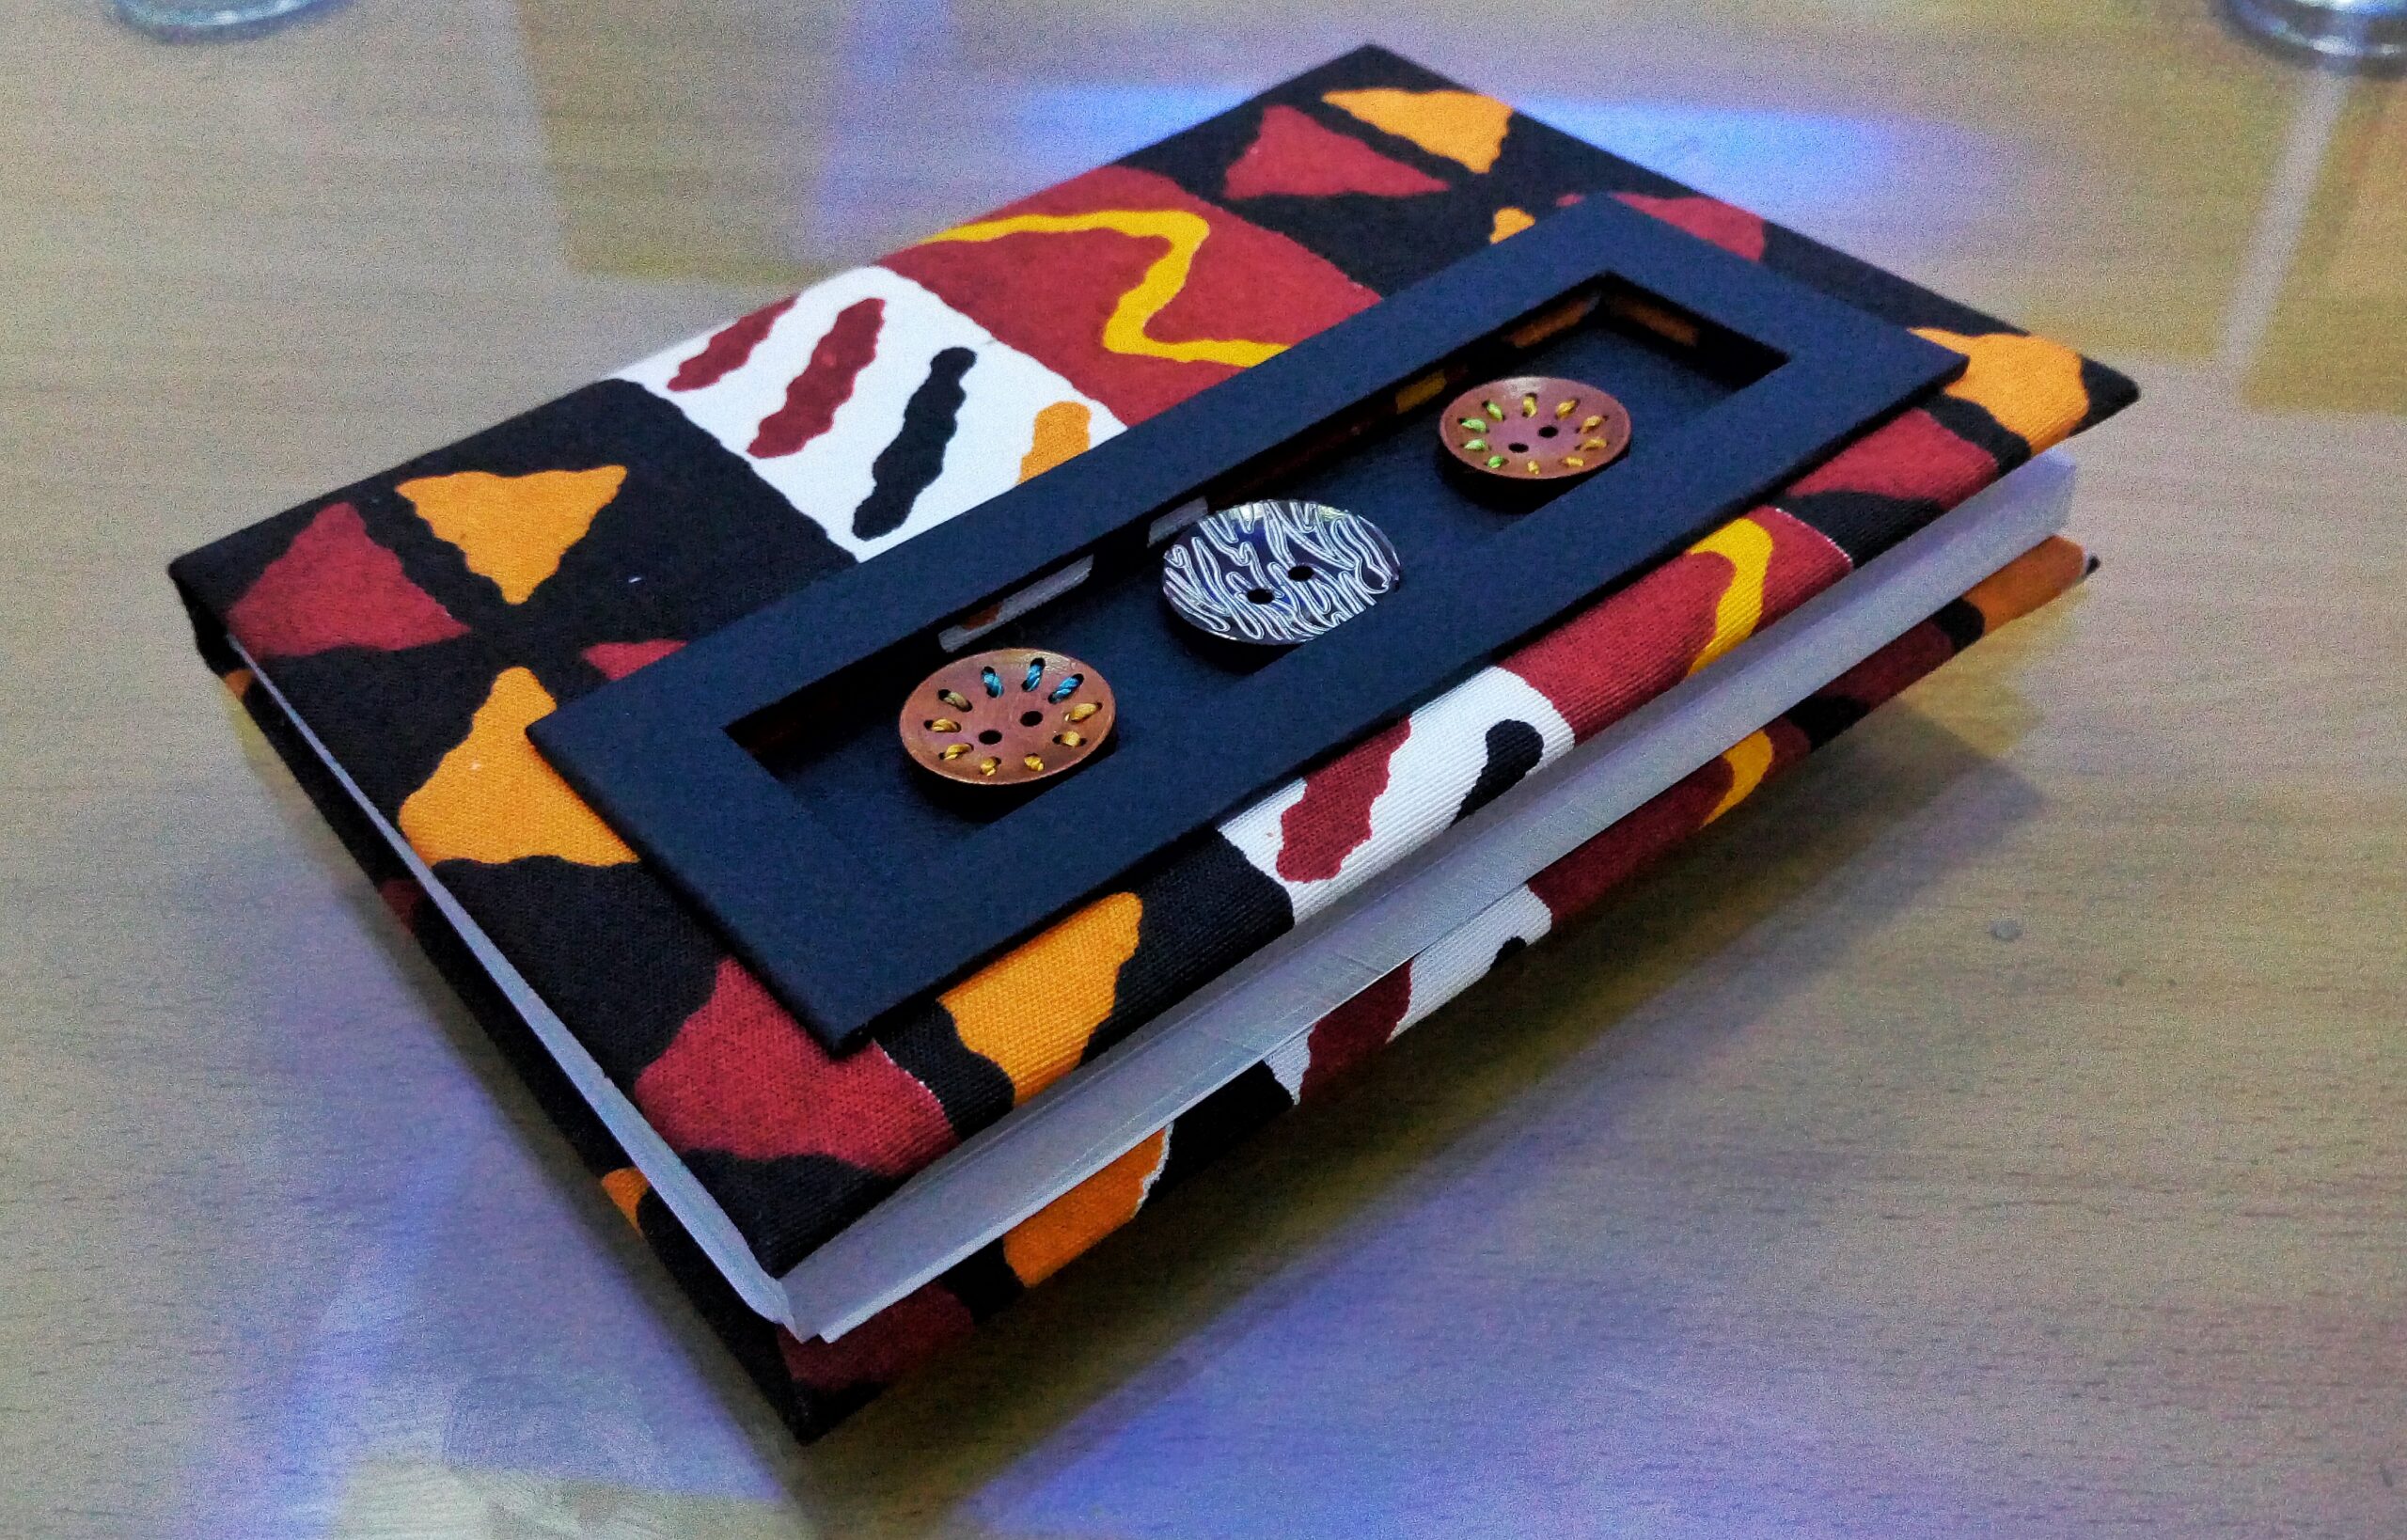 Handmade journal